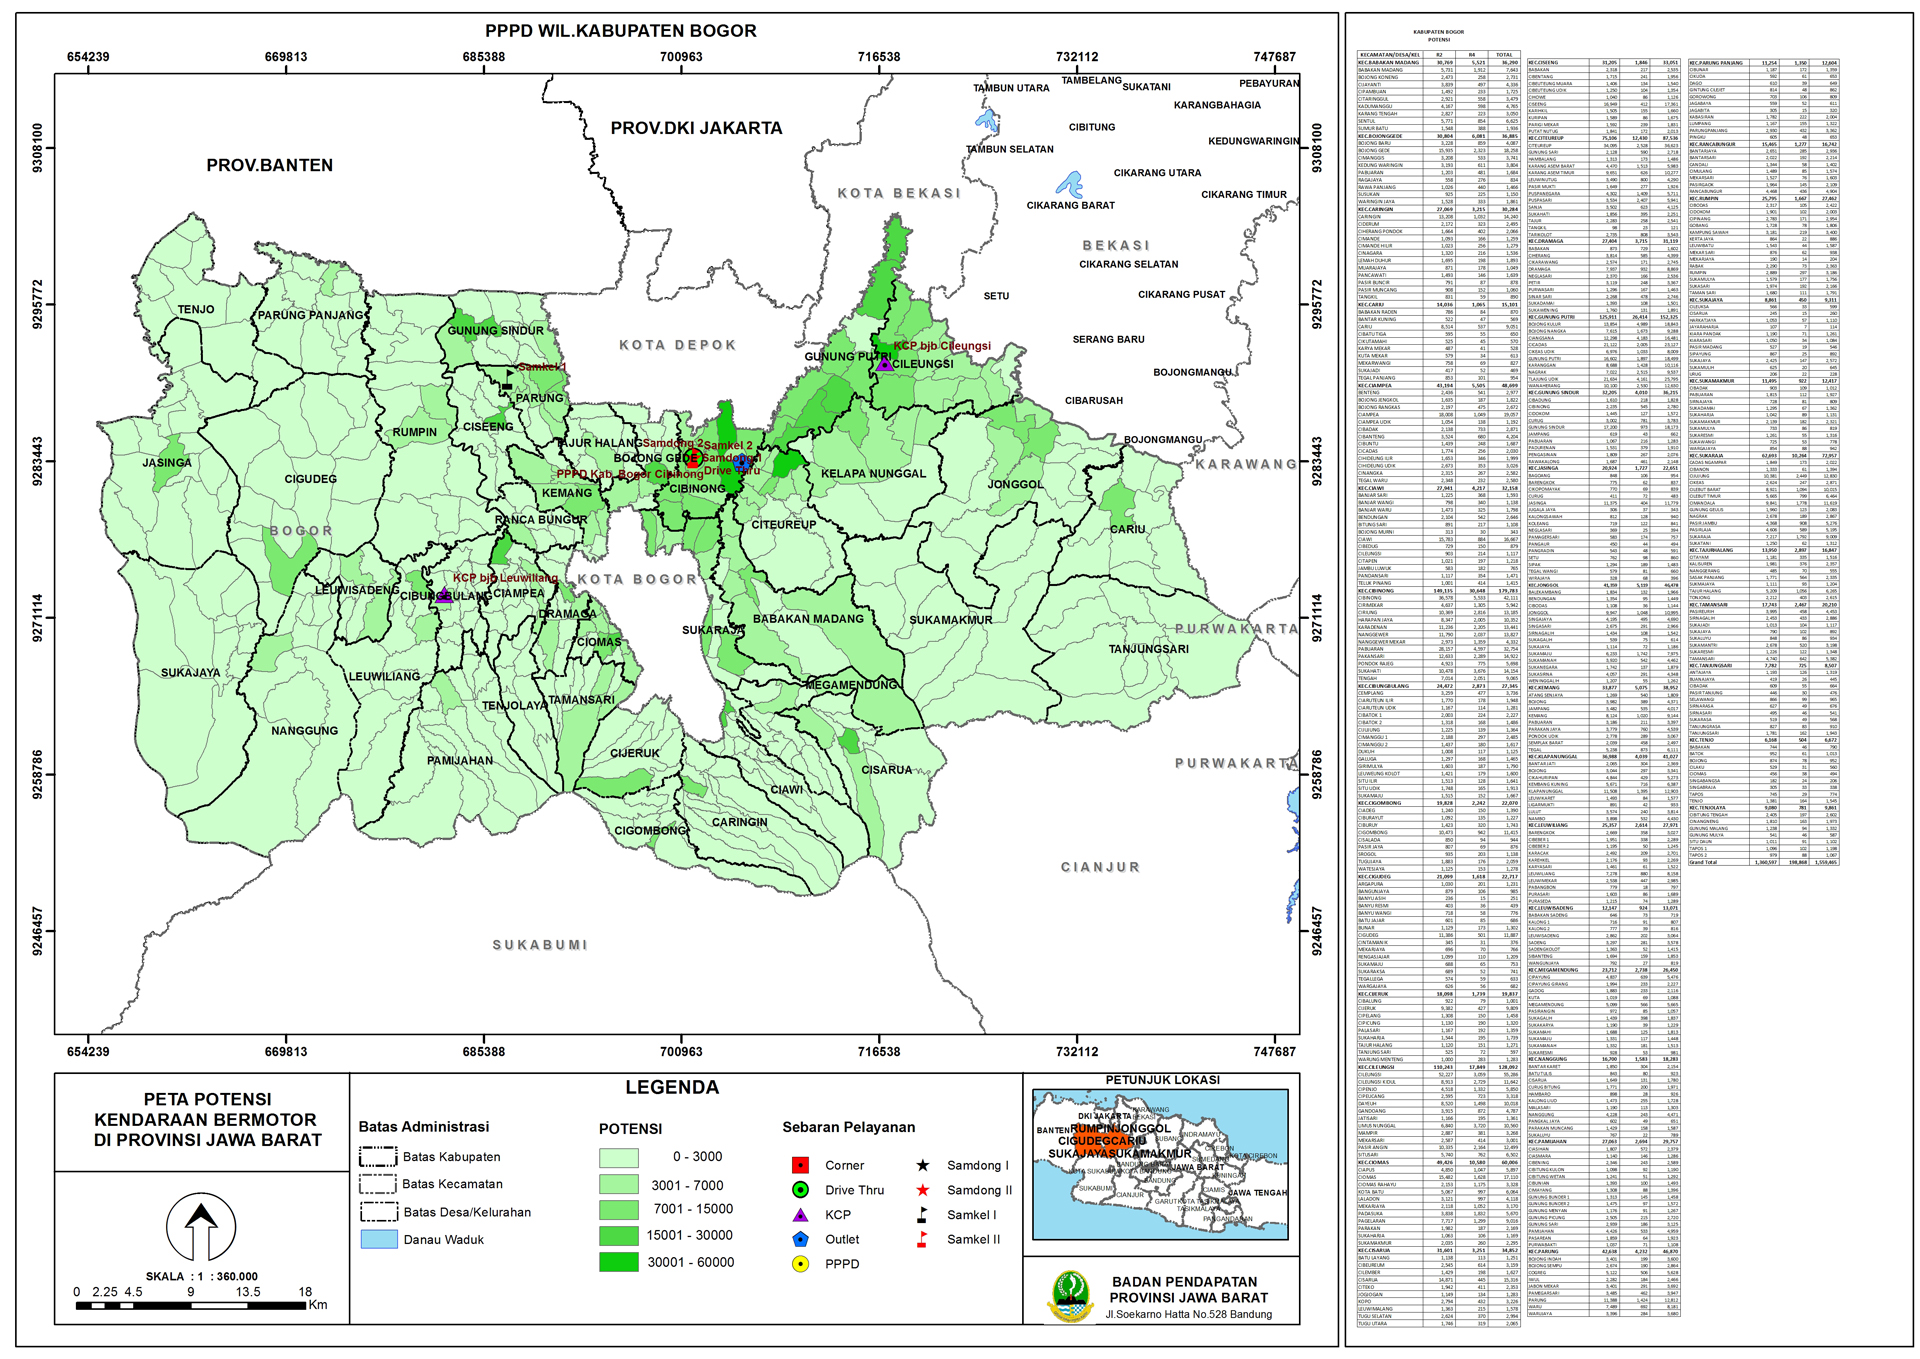  Peta  Potensi Kendaraan Bermotor Cabang Kabupaten  Bogor  